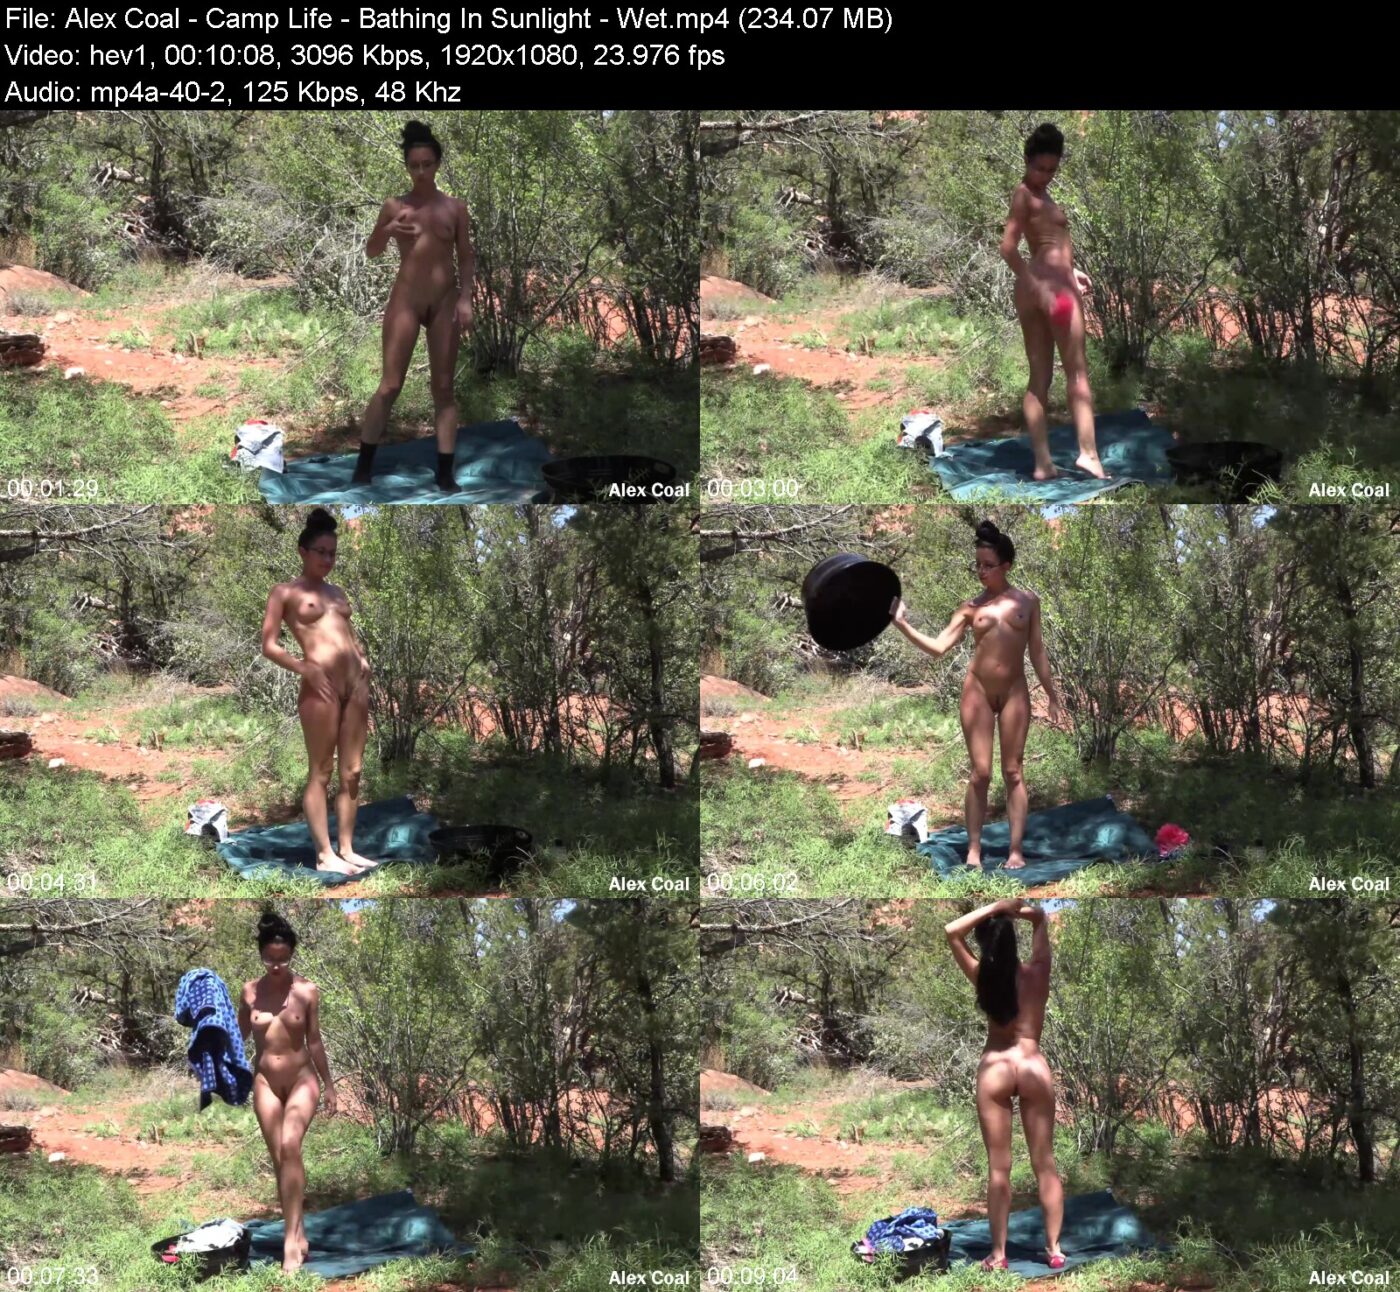 Alex Coal in Camp Life in Bathing In Sunlight in Wet